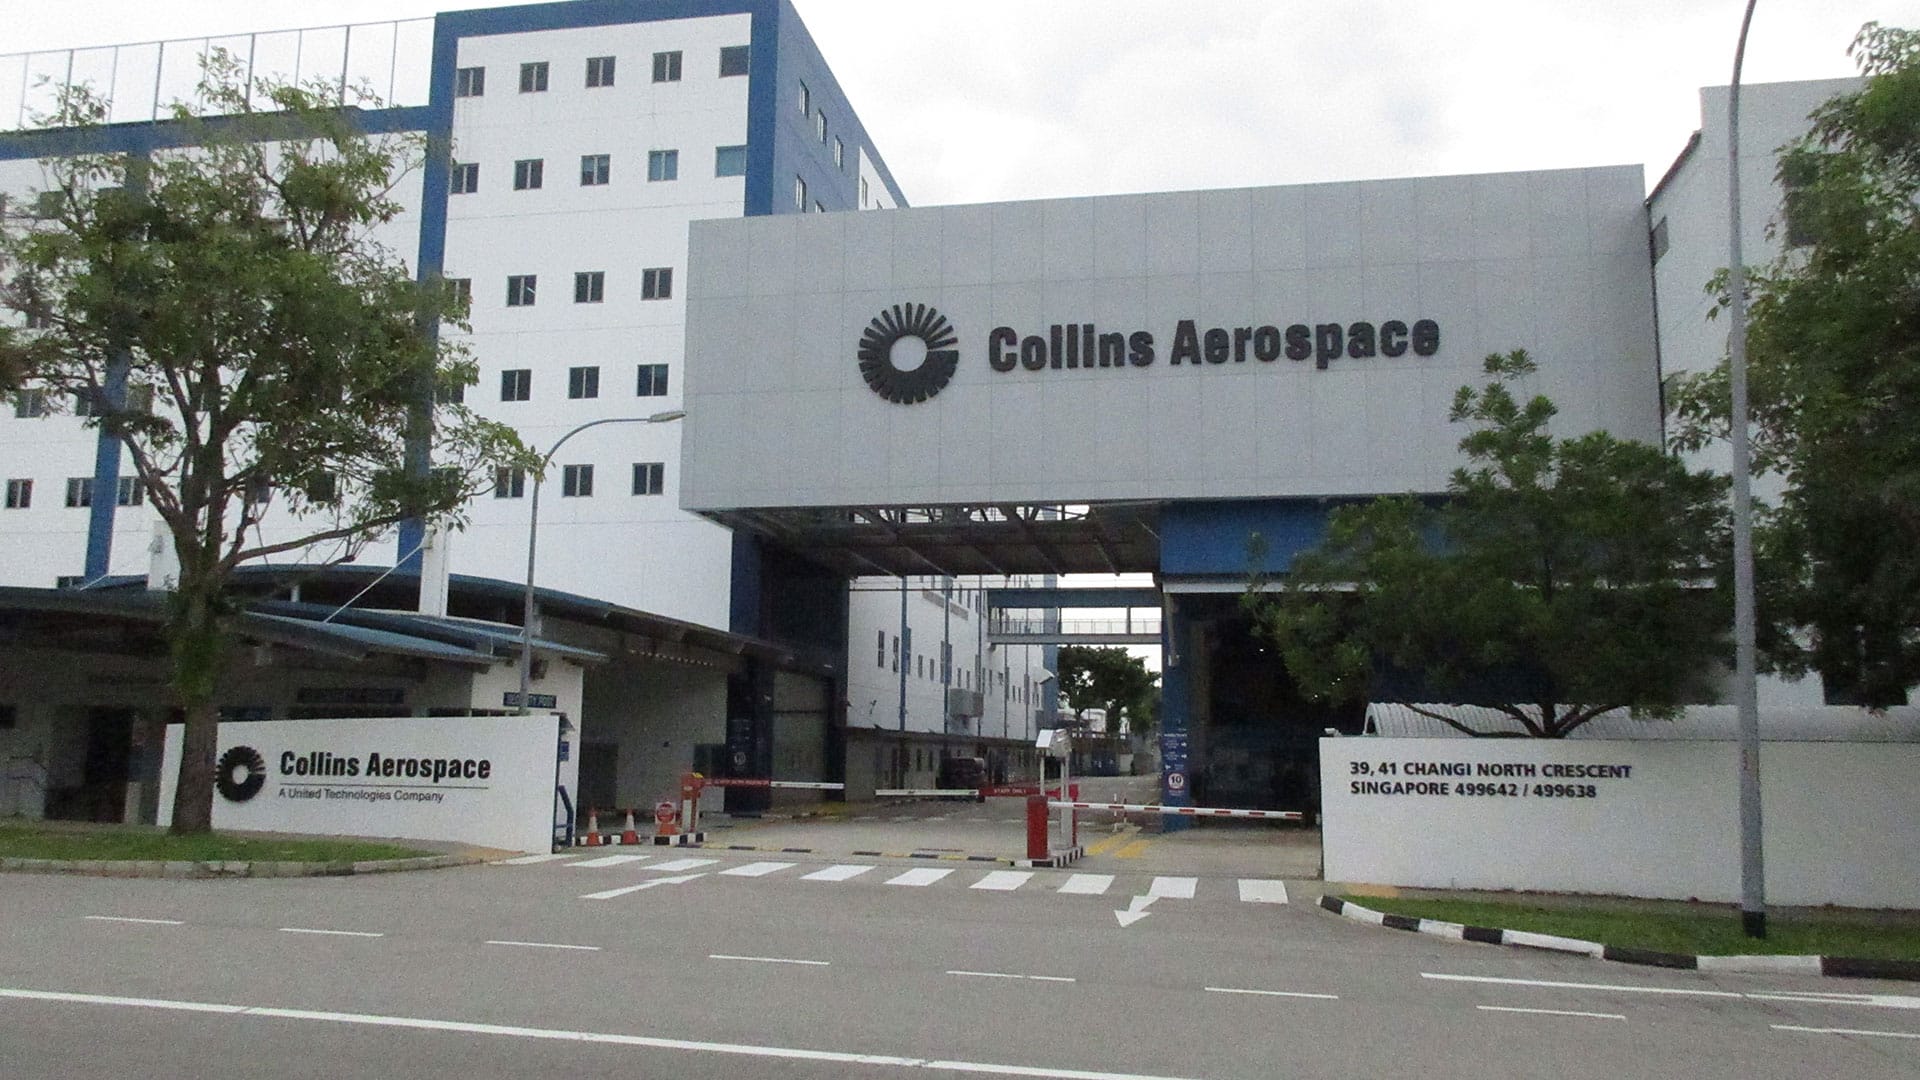 Associate Engineer (Hybrid) At Collins Aerospace